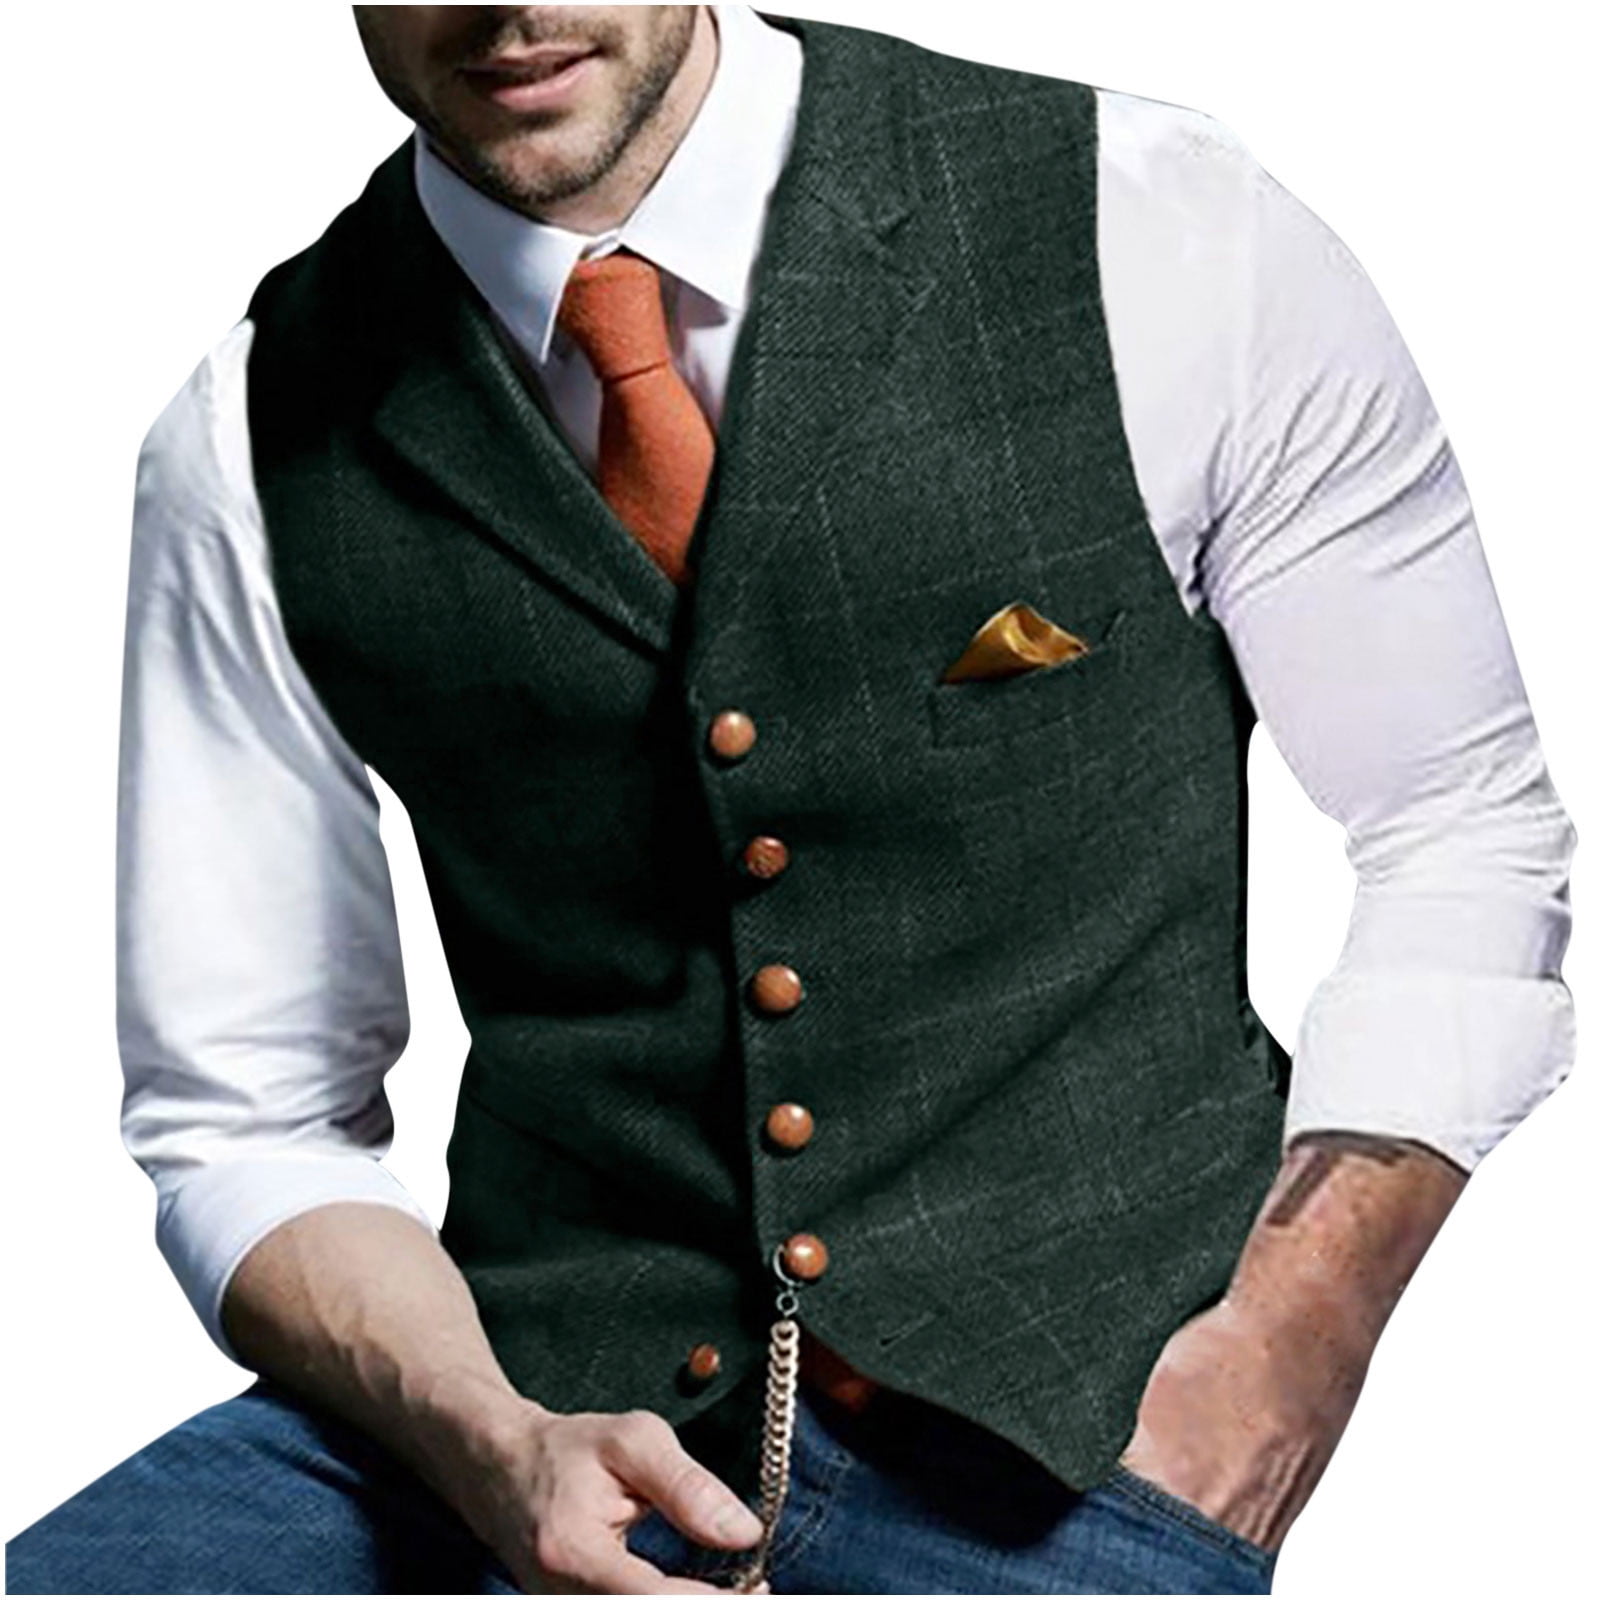 2-Piece Suit Men Party Wear Waistcoat, Tweed at Rs 600/piece in Ludhiana |  ID: 22623202855